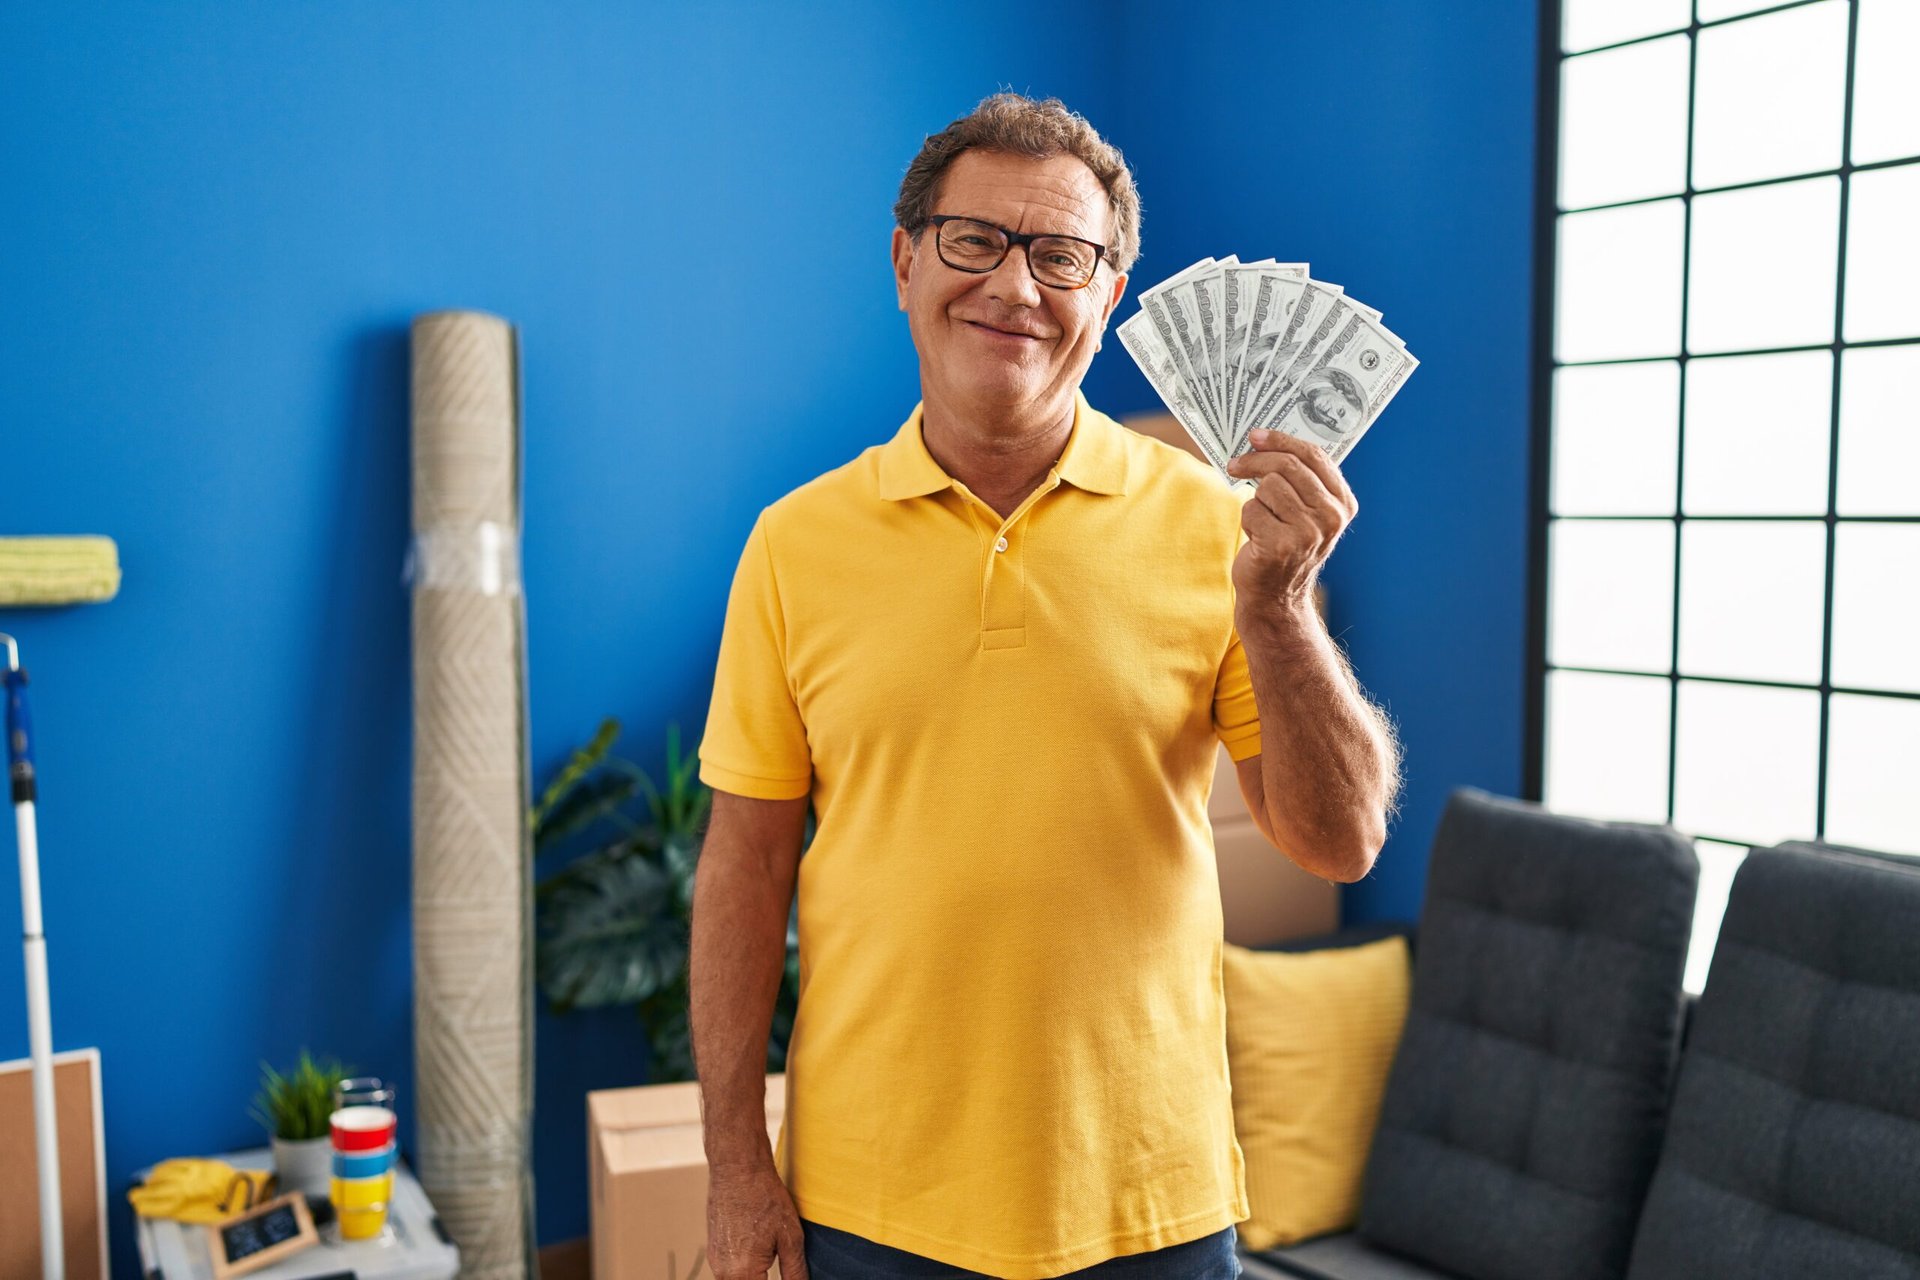 Senior man holding money